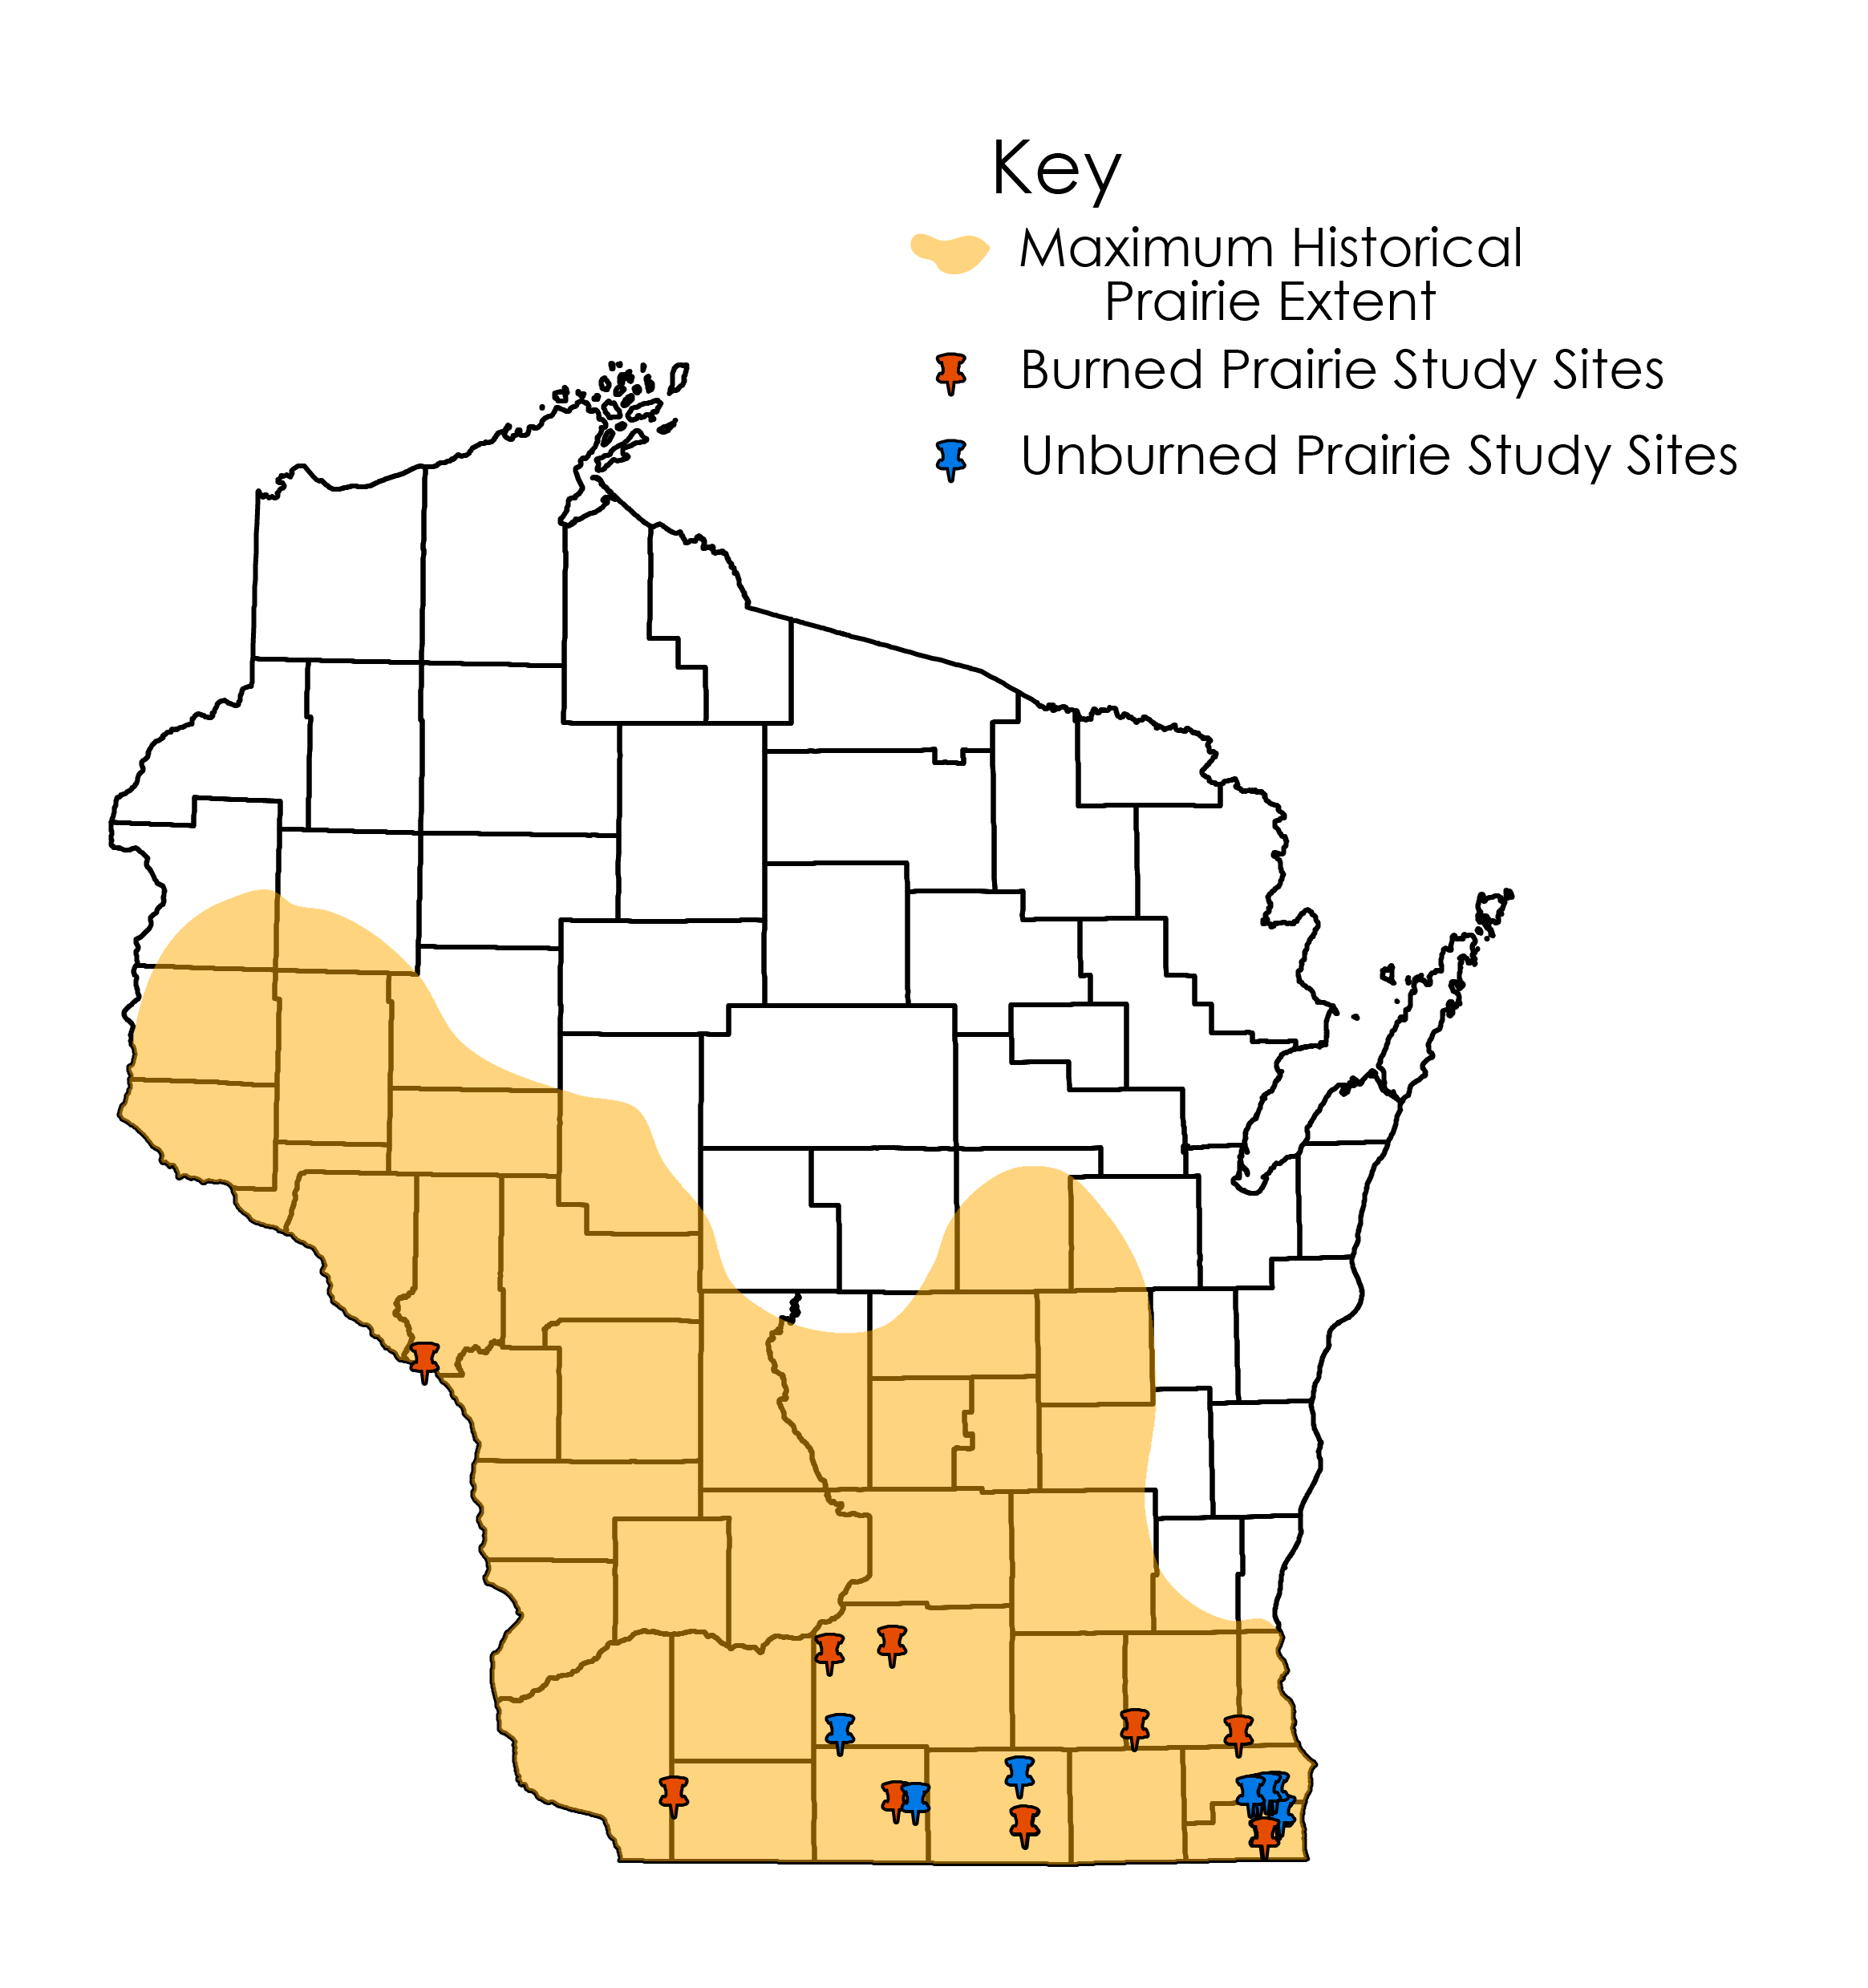 Historical prairie extent in Wisconsin